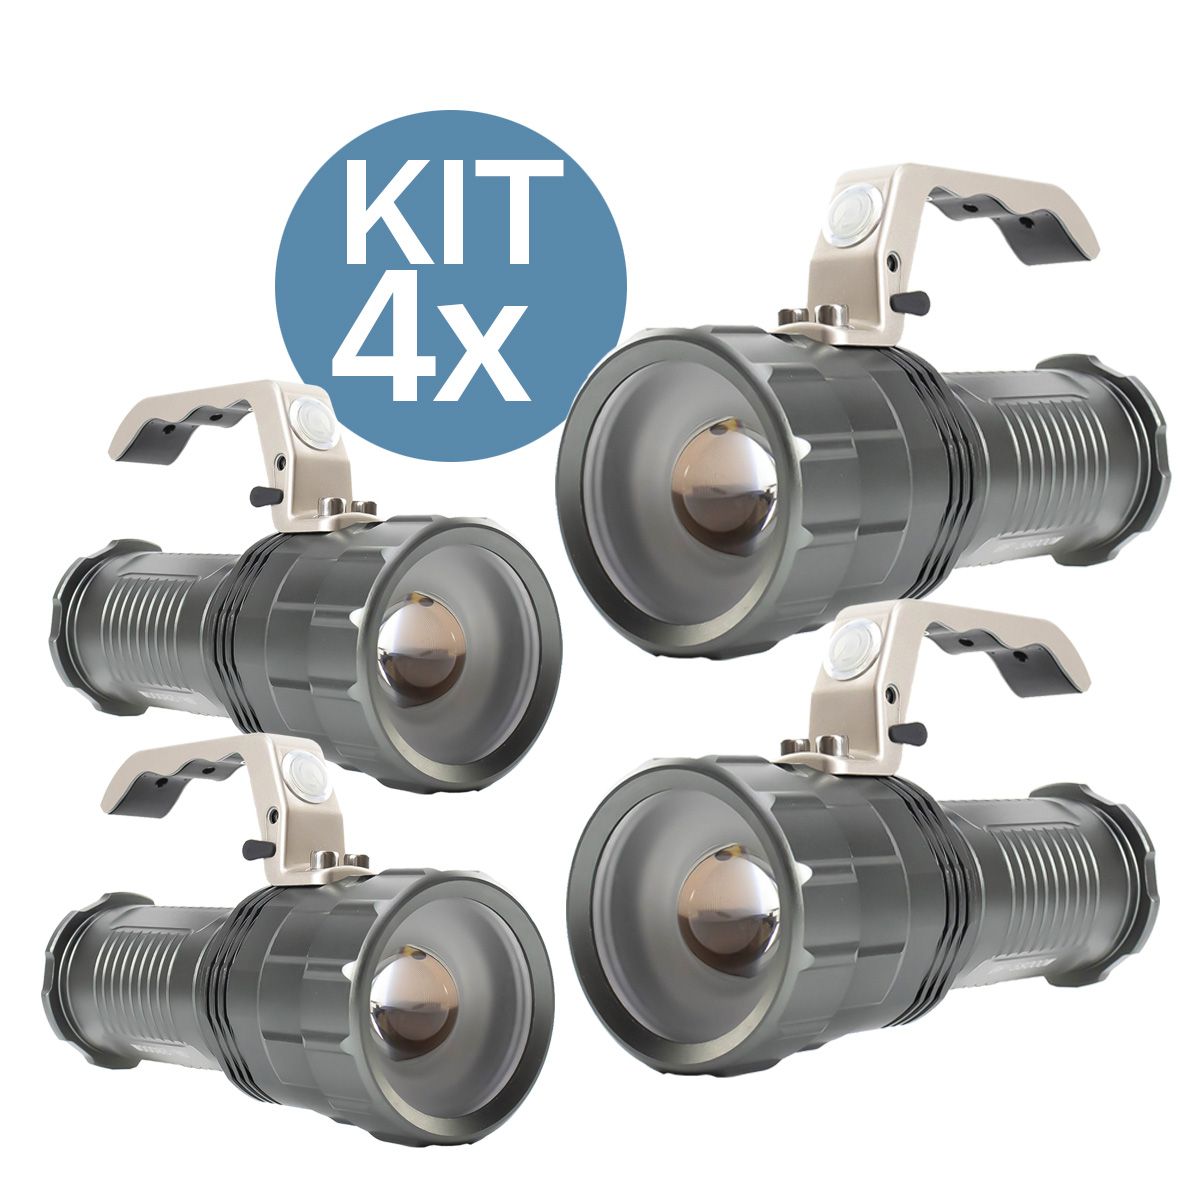 KIT 4x Lanterna Led Recarregável de 1200 Lumens B-Max BM-8806